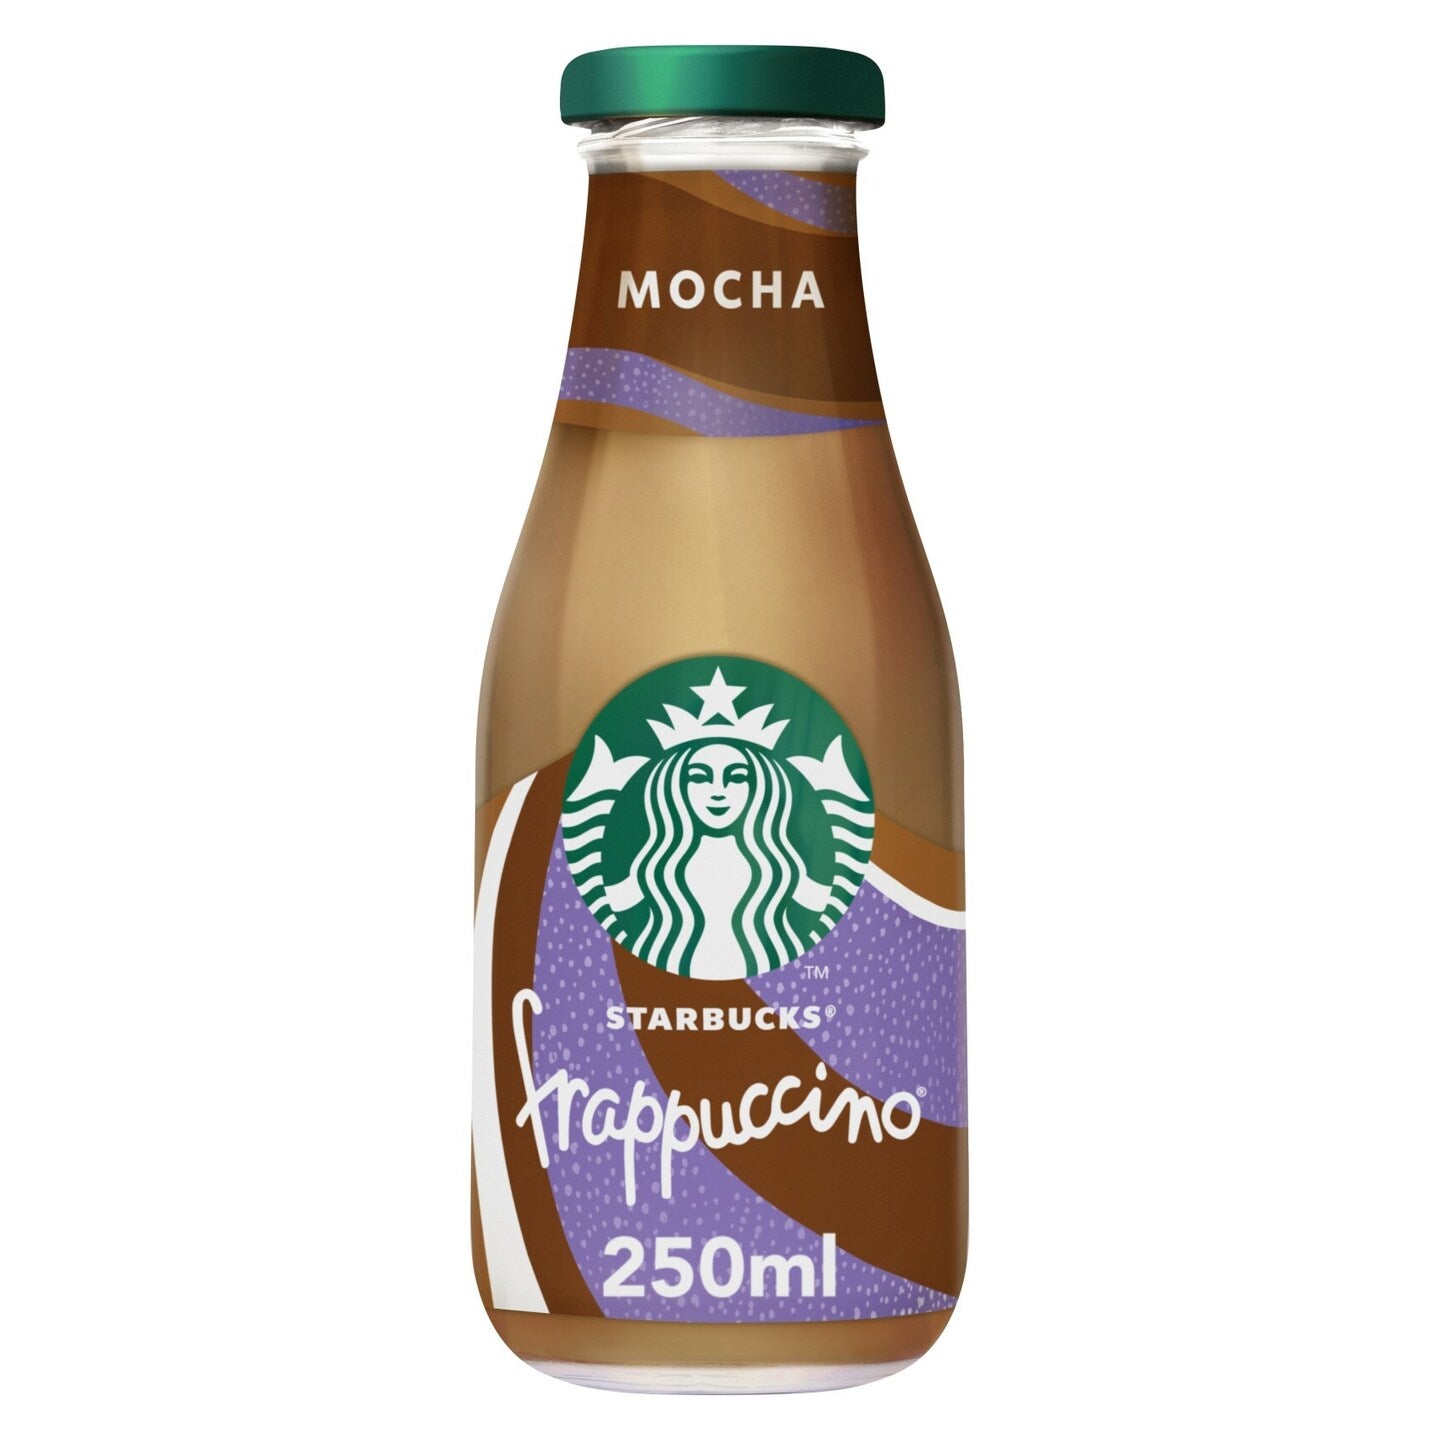 Starbucks Frappuccino - Creamy Mocha Delight - Coffee Drink Bottle 250ml

- Best Before 12-12-22